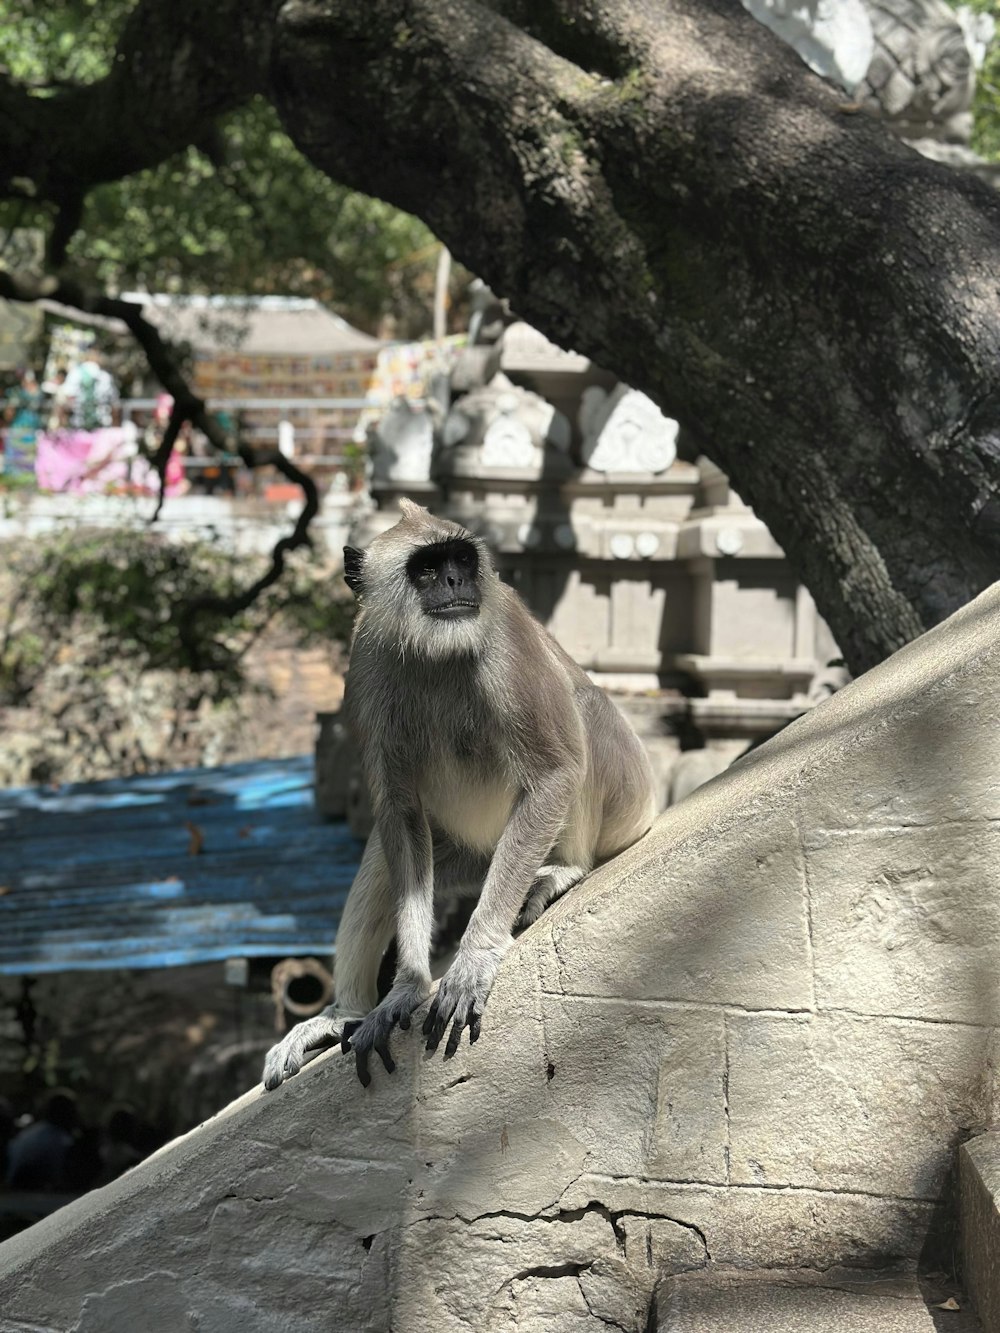 a monkey is sitting on a ledge near a tree